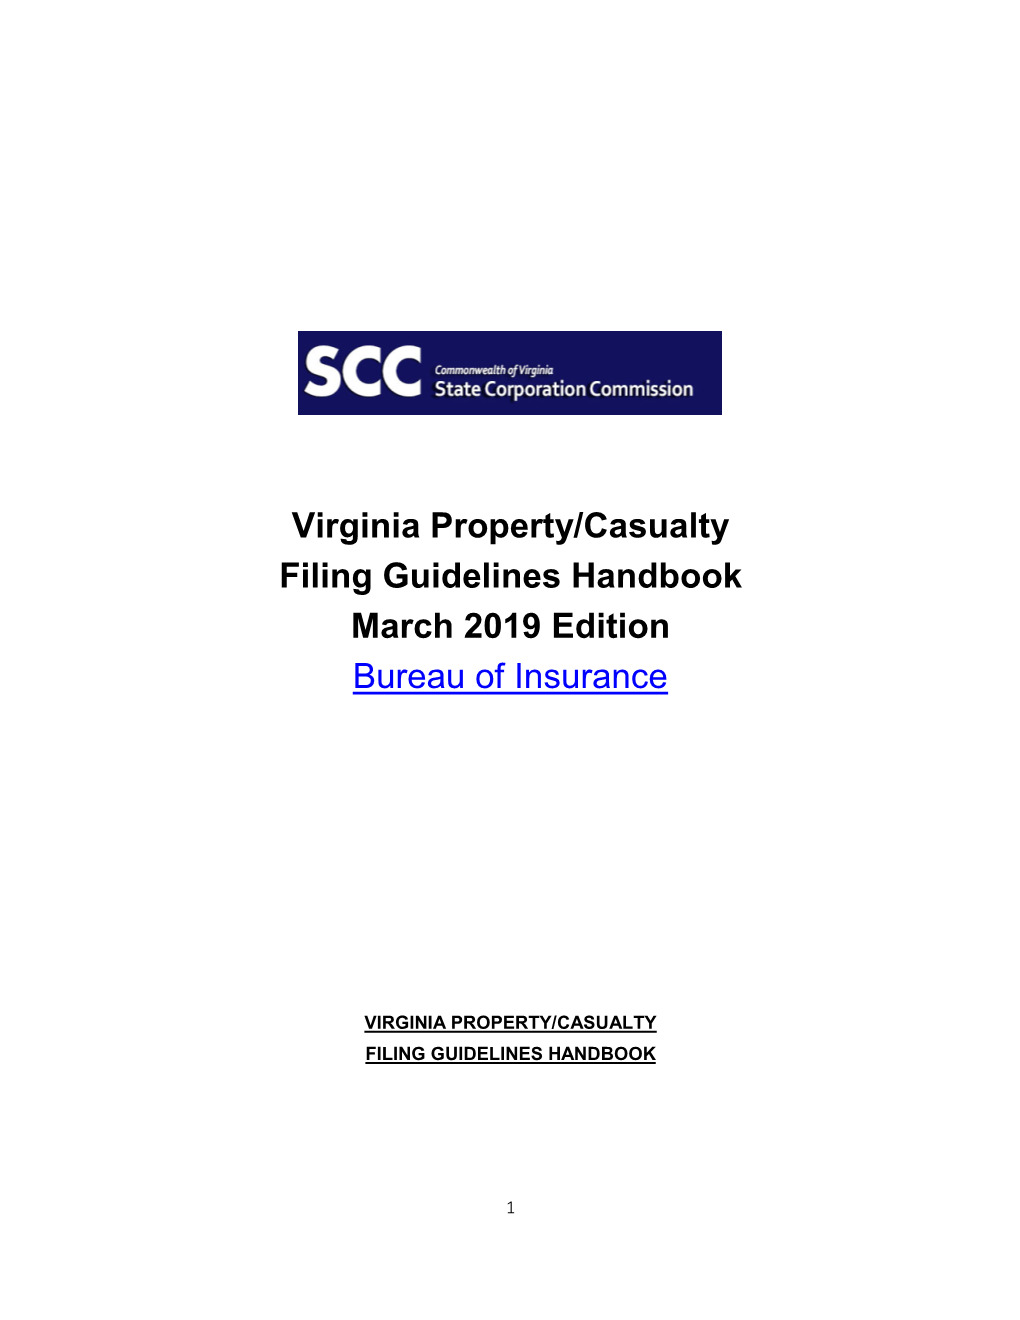 Virginia Property/Casualty Filing Guidelines Handbook March 2019 Edition Bureau of Insurance